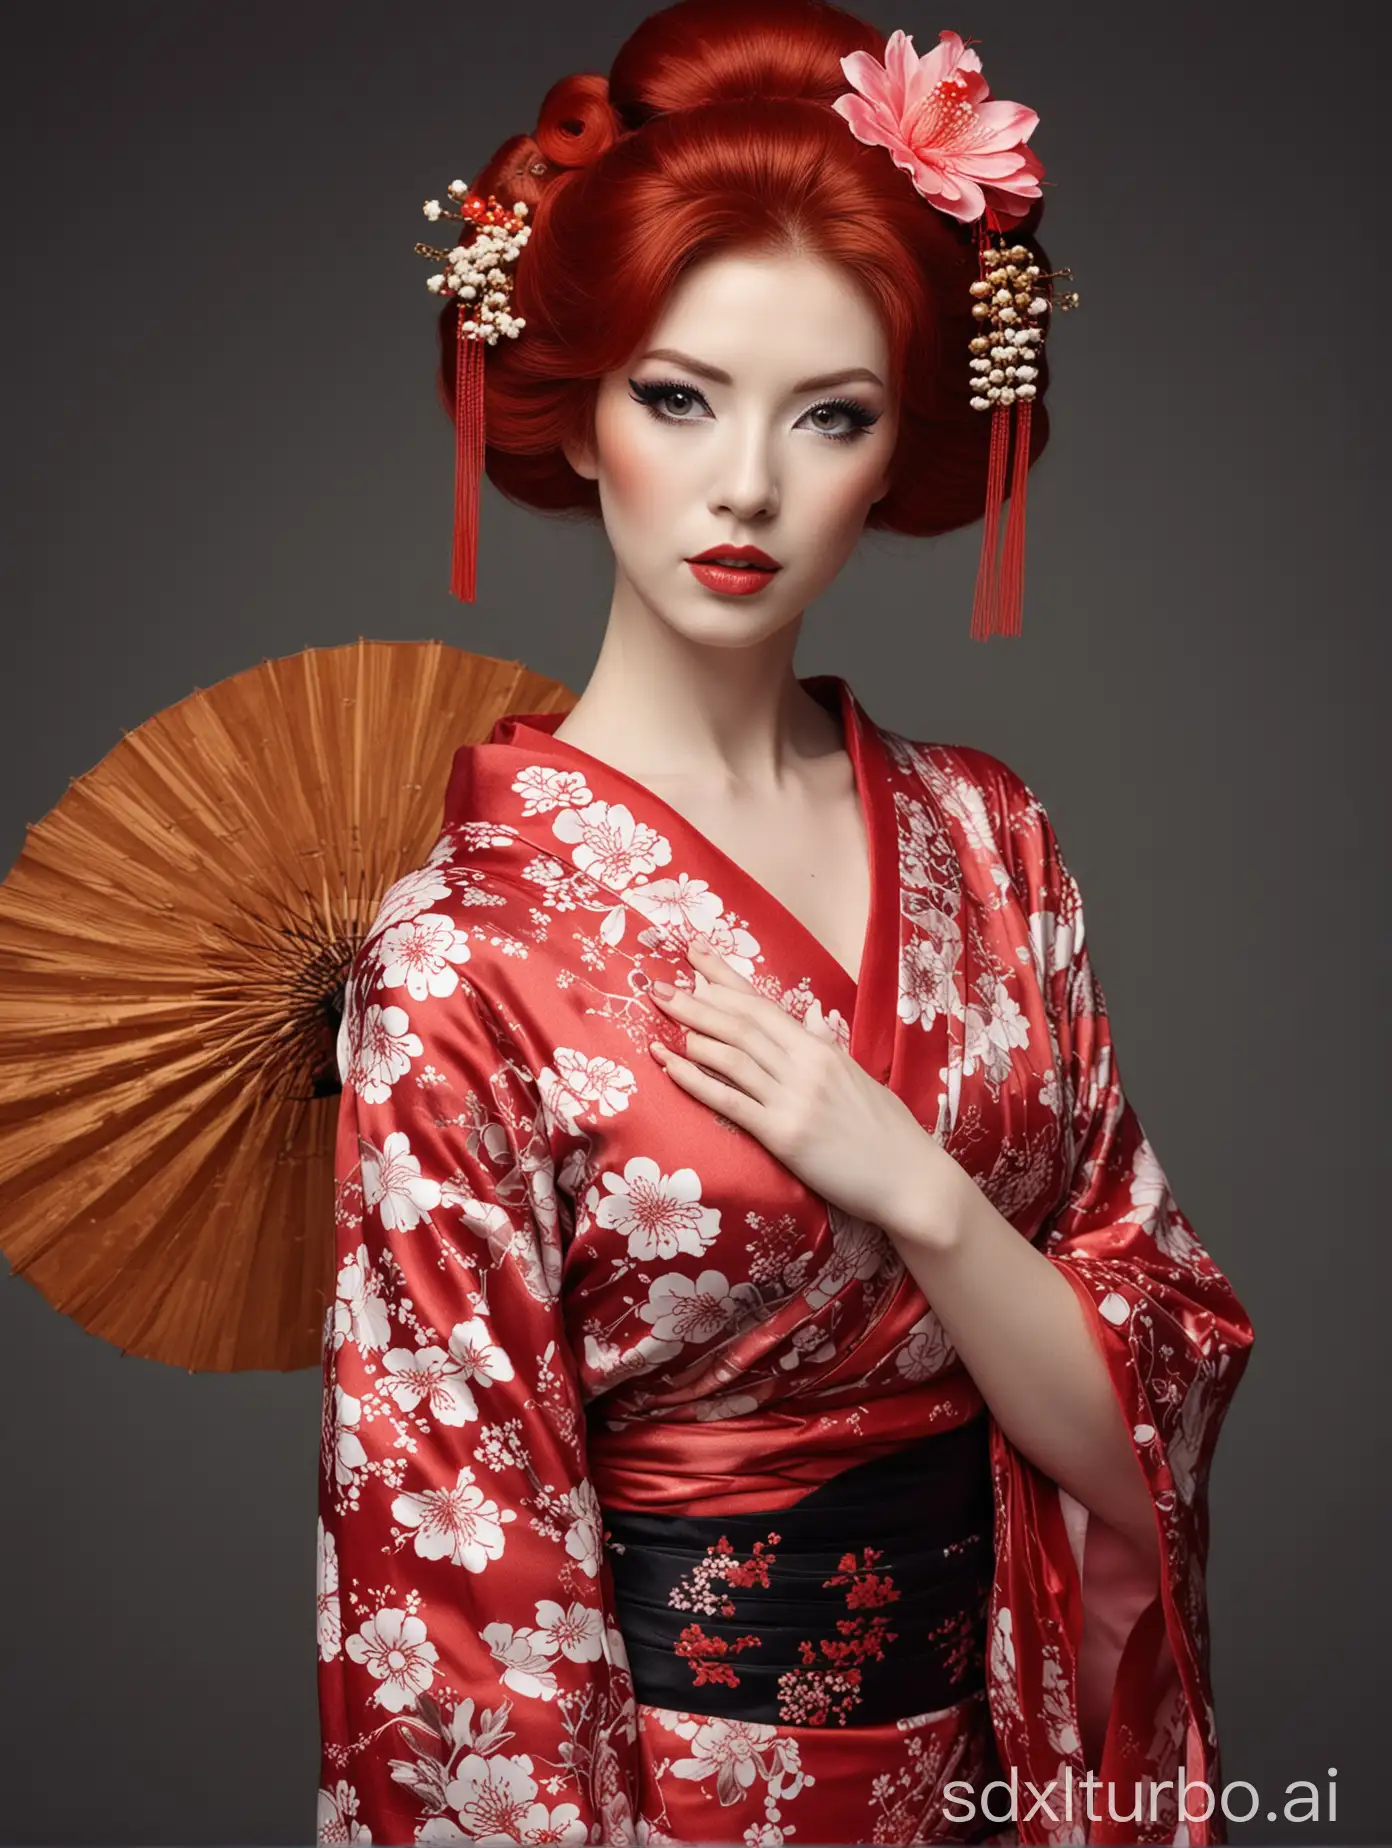 redhead sexy woman dressed as gheisa